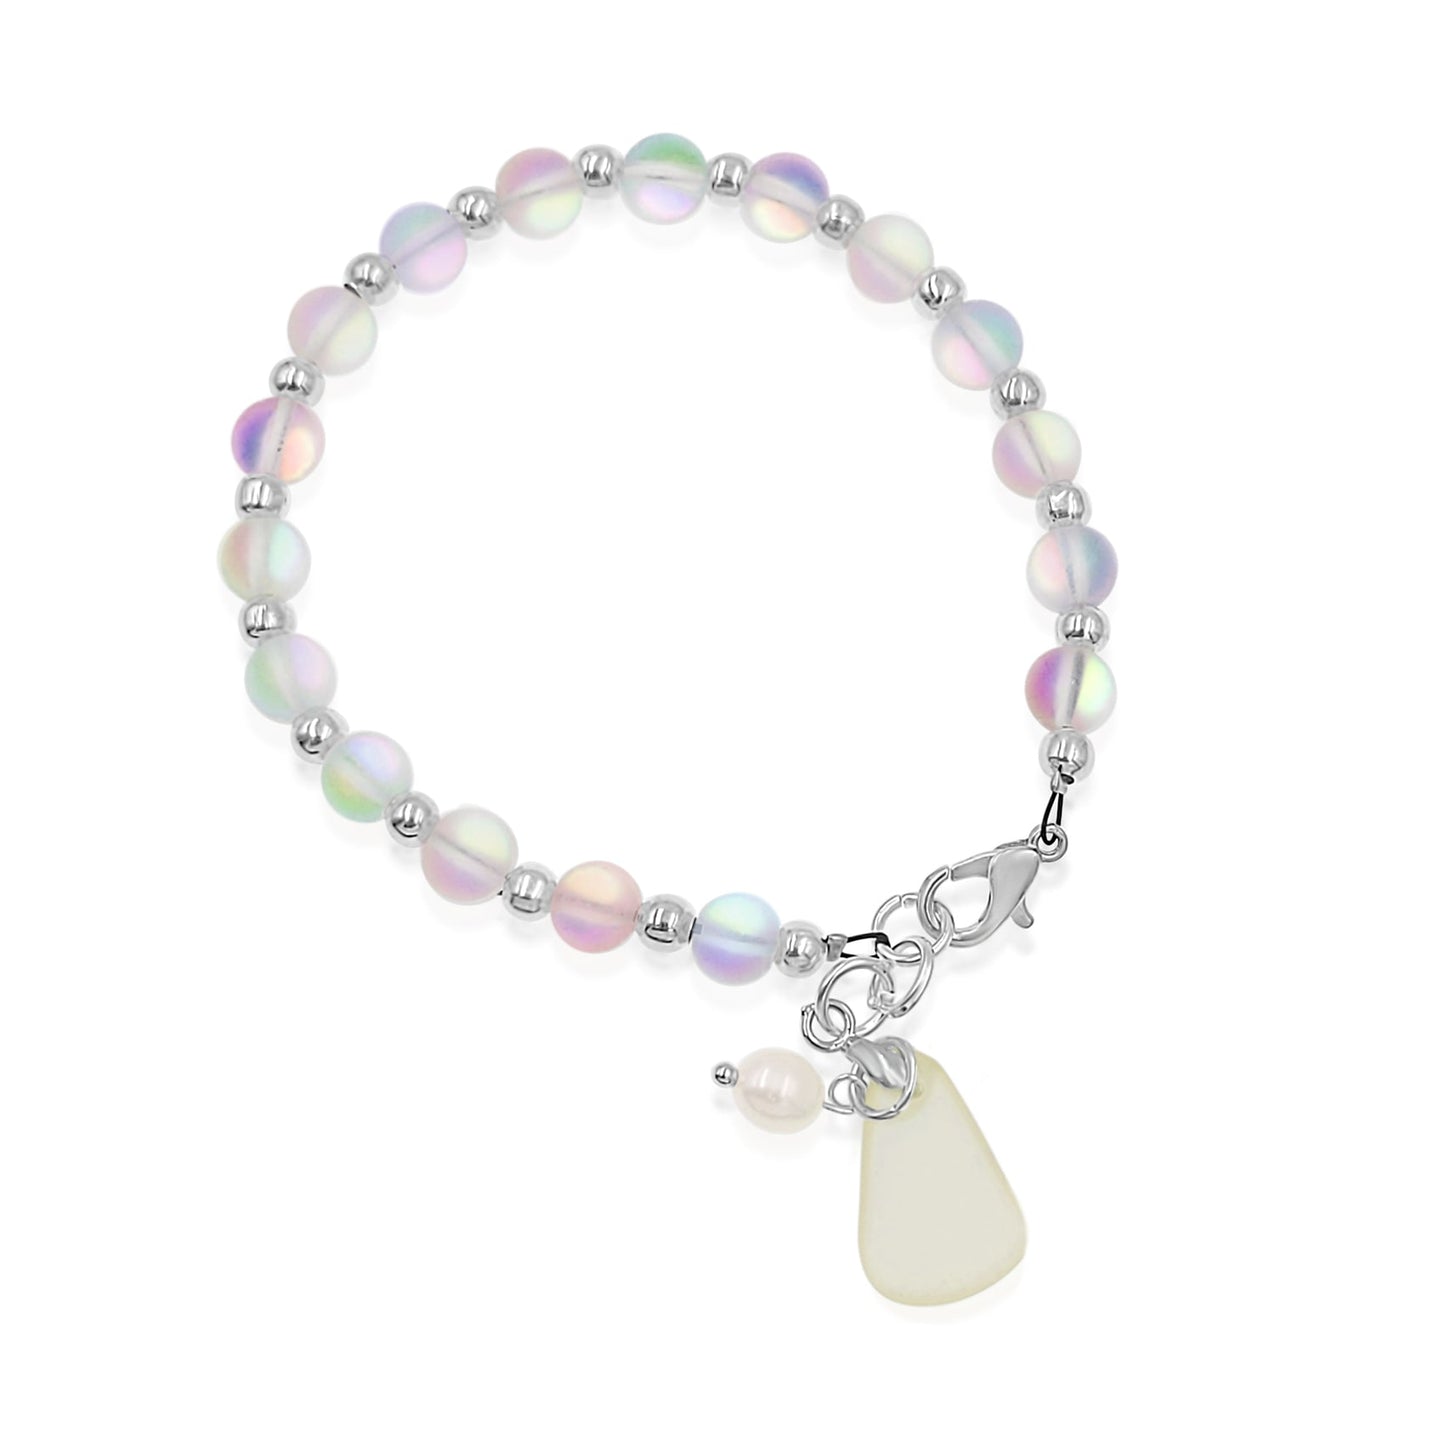 BESHEEK Silvertone, Clear, Yellow Seaglass and Freshwater Pearl Beaded Bracelet| Handmade Hypoallergenic Boho Beach Gala Wedding Style Jewelry